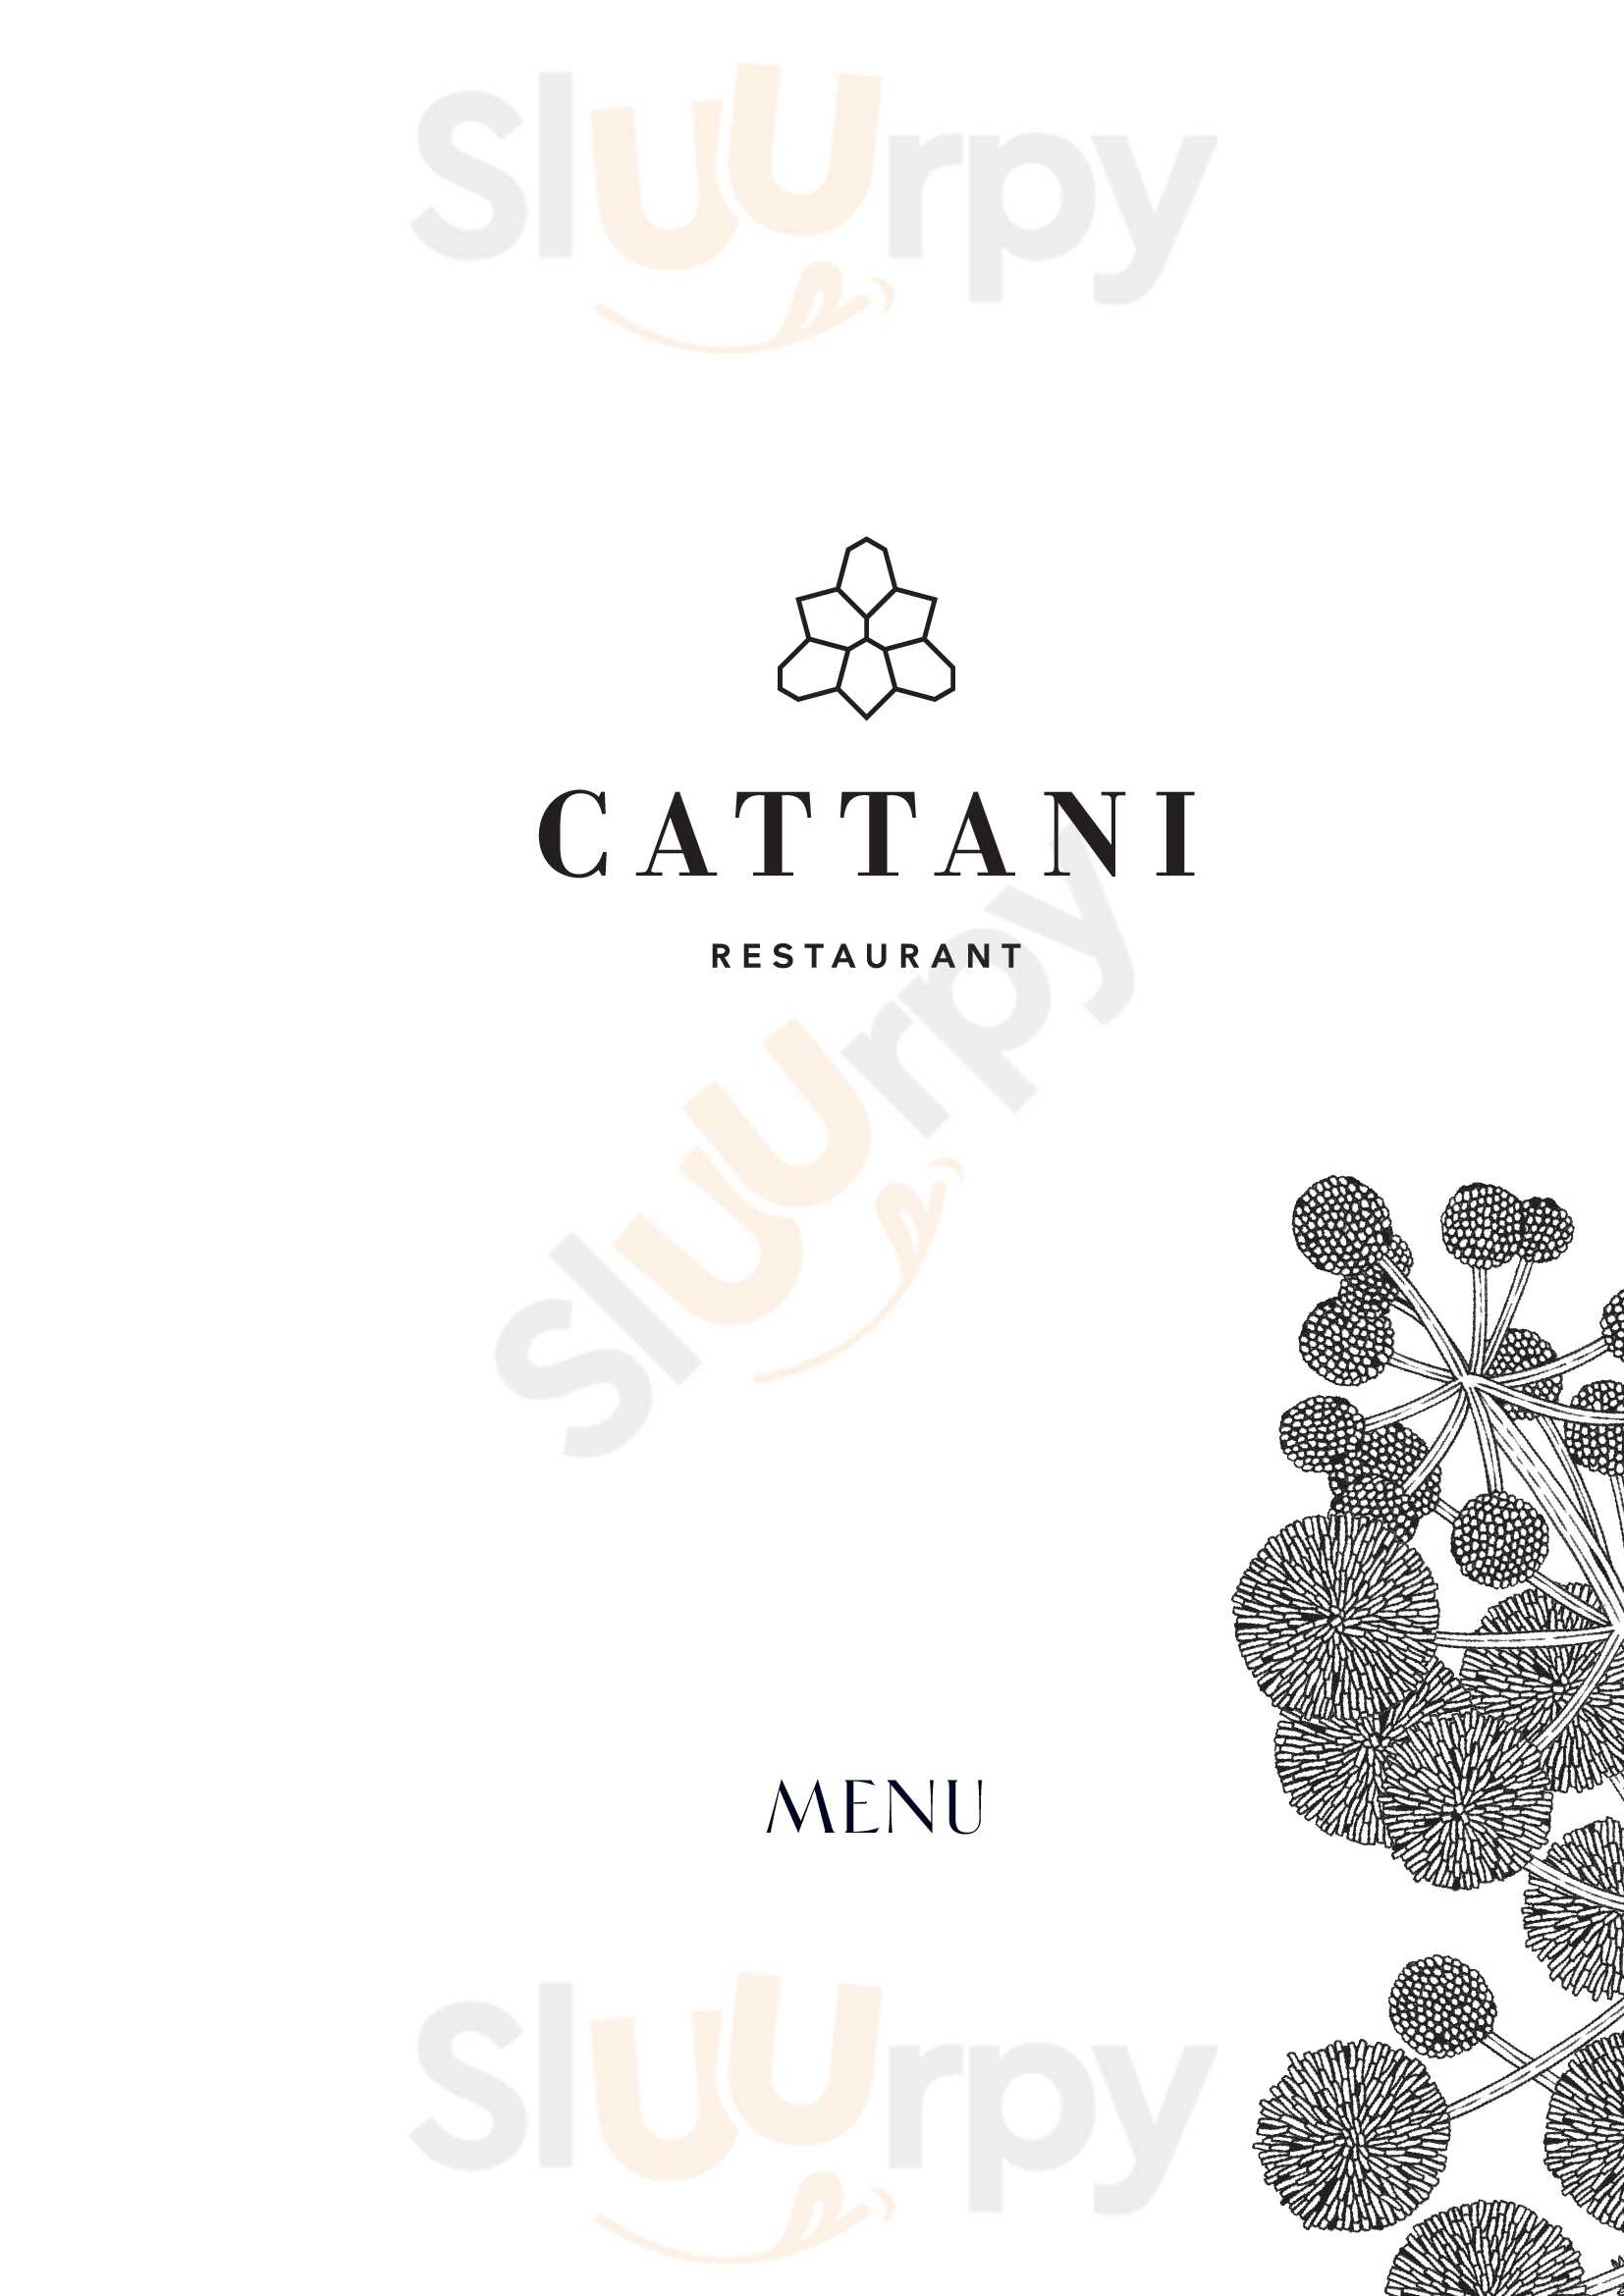 Cattani Restaurant Engelberg Menu - 1